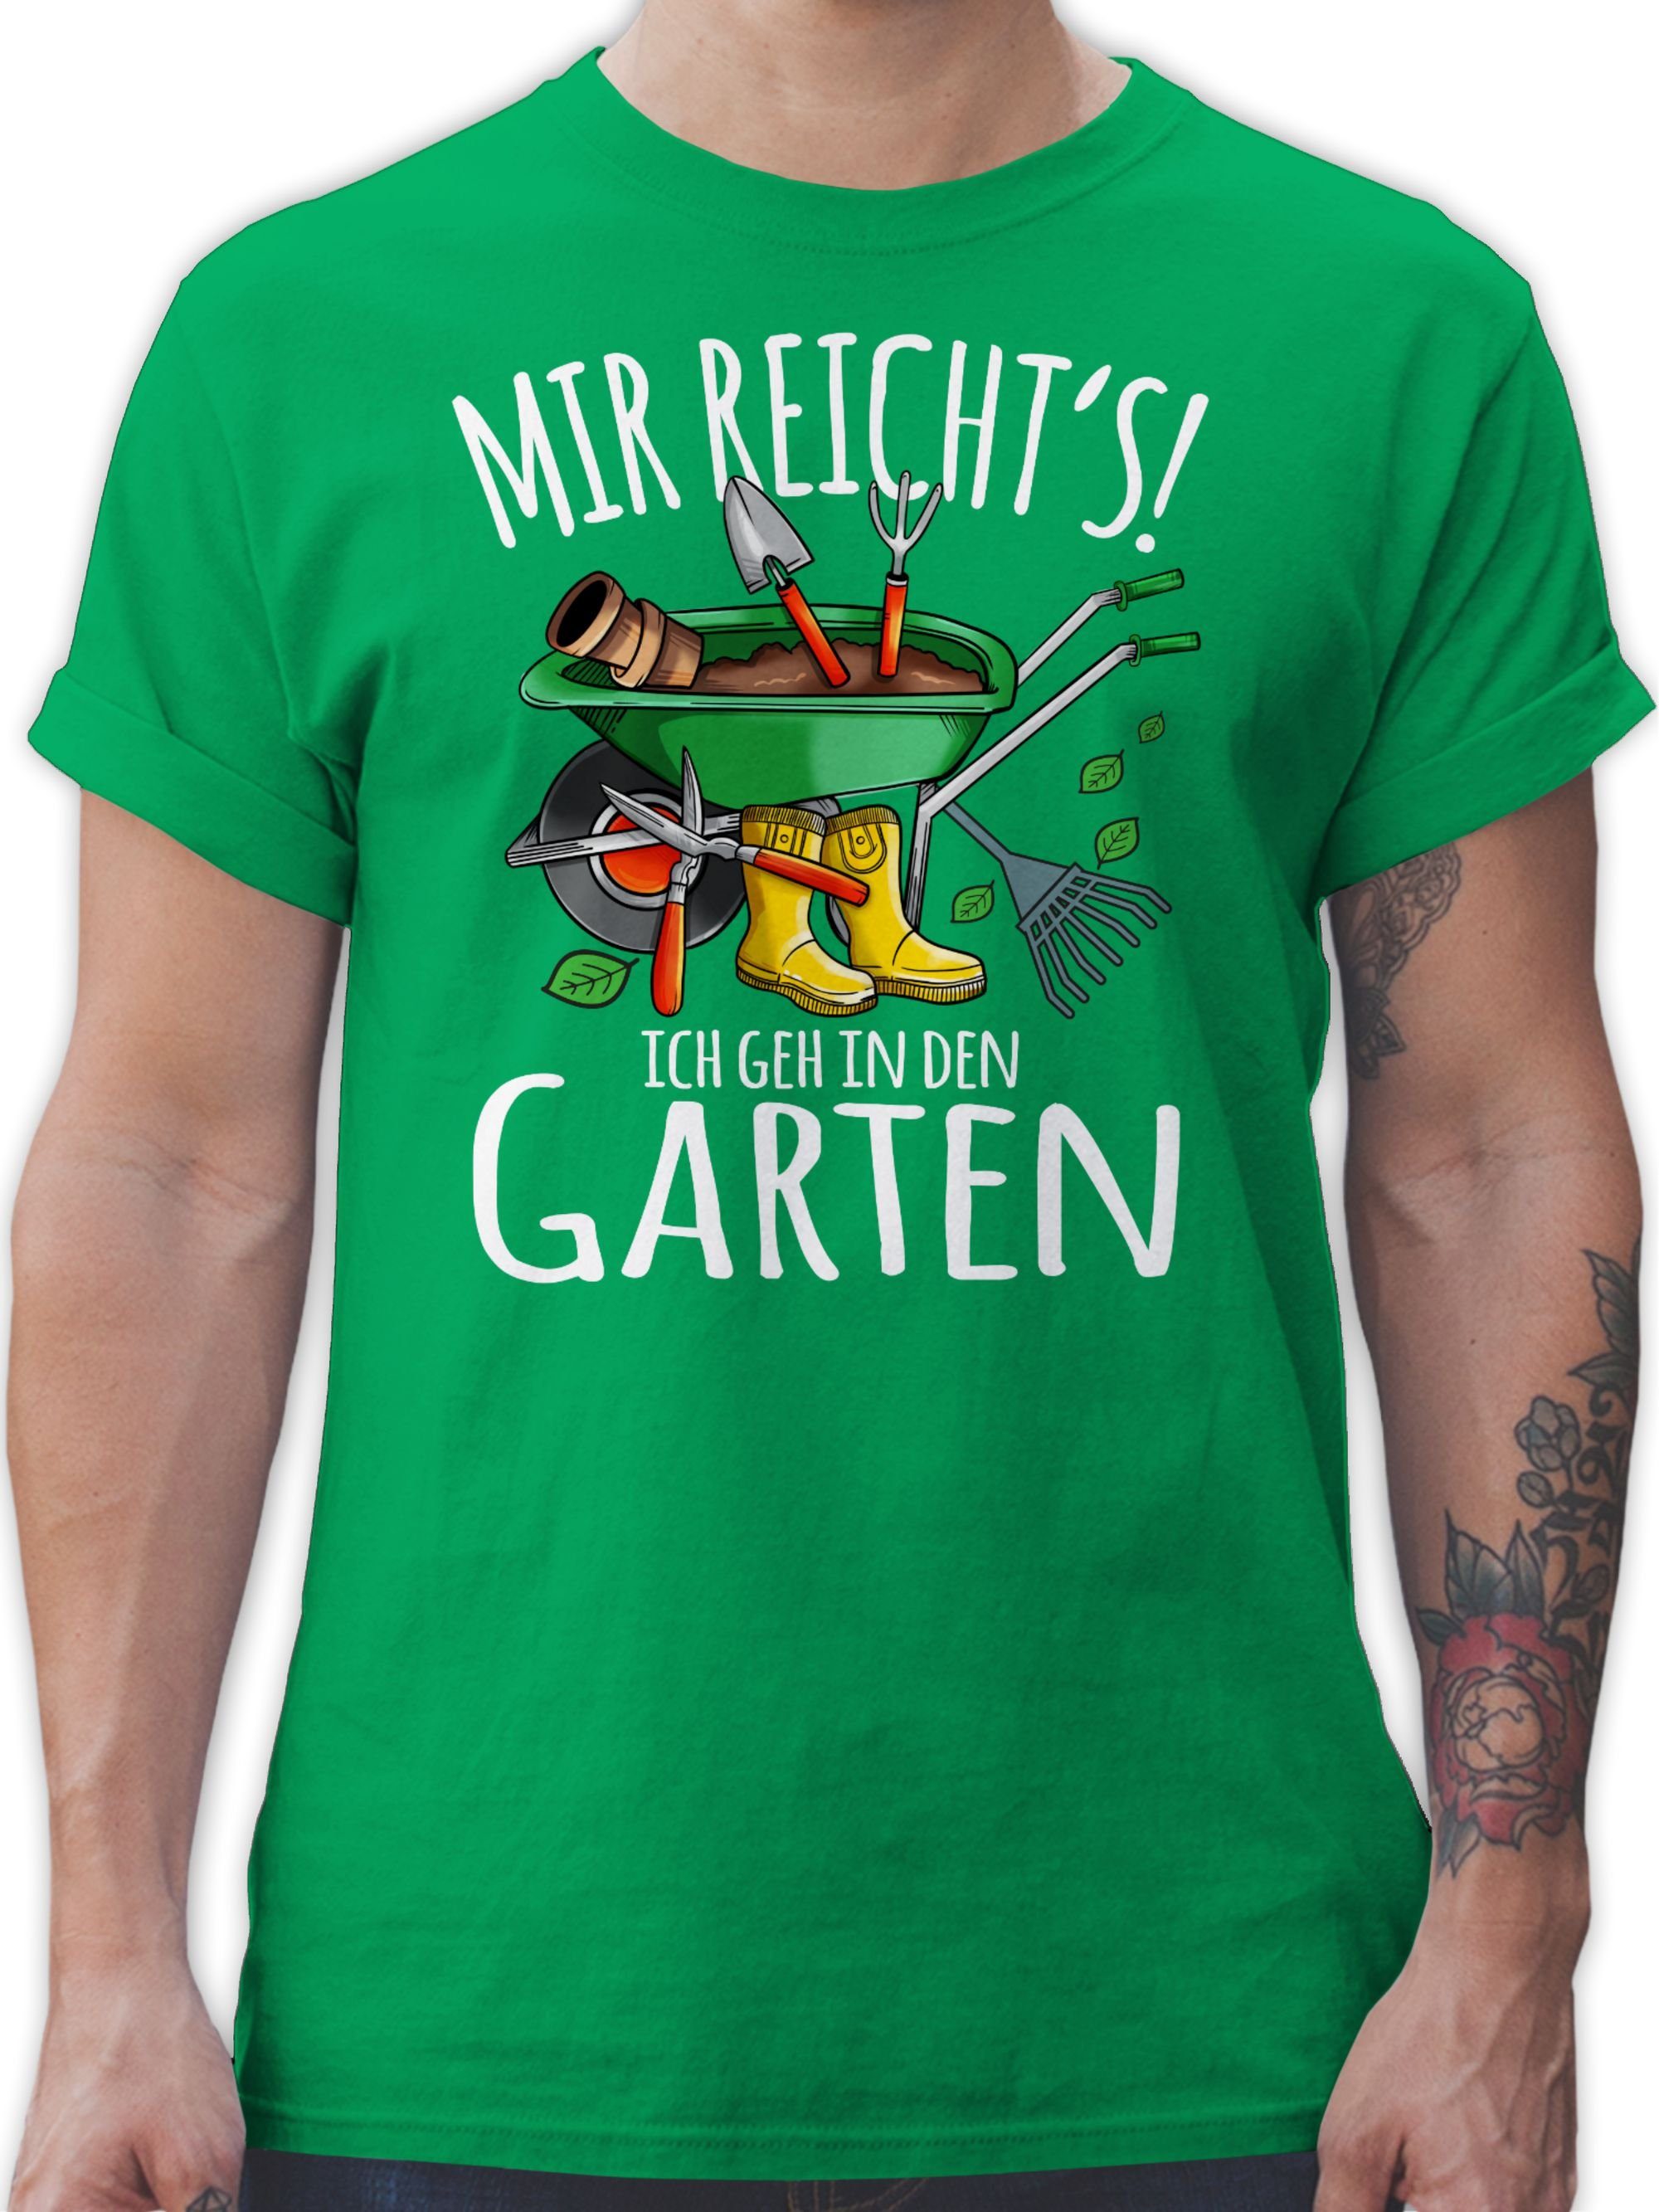 Shirtracer T-Shirt Mir reicht's ich geh in den Garten - Gartenarbeit & Gärtnern - weiß Hobby Outfit